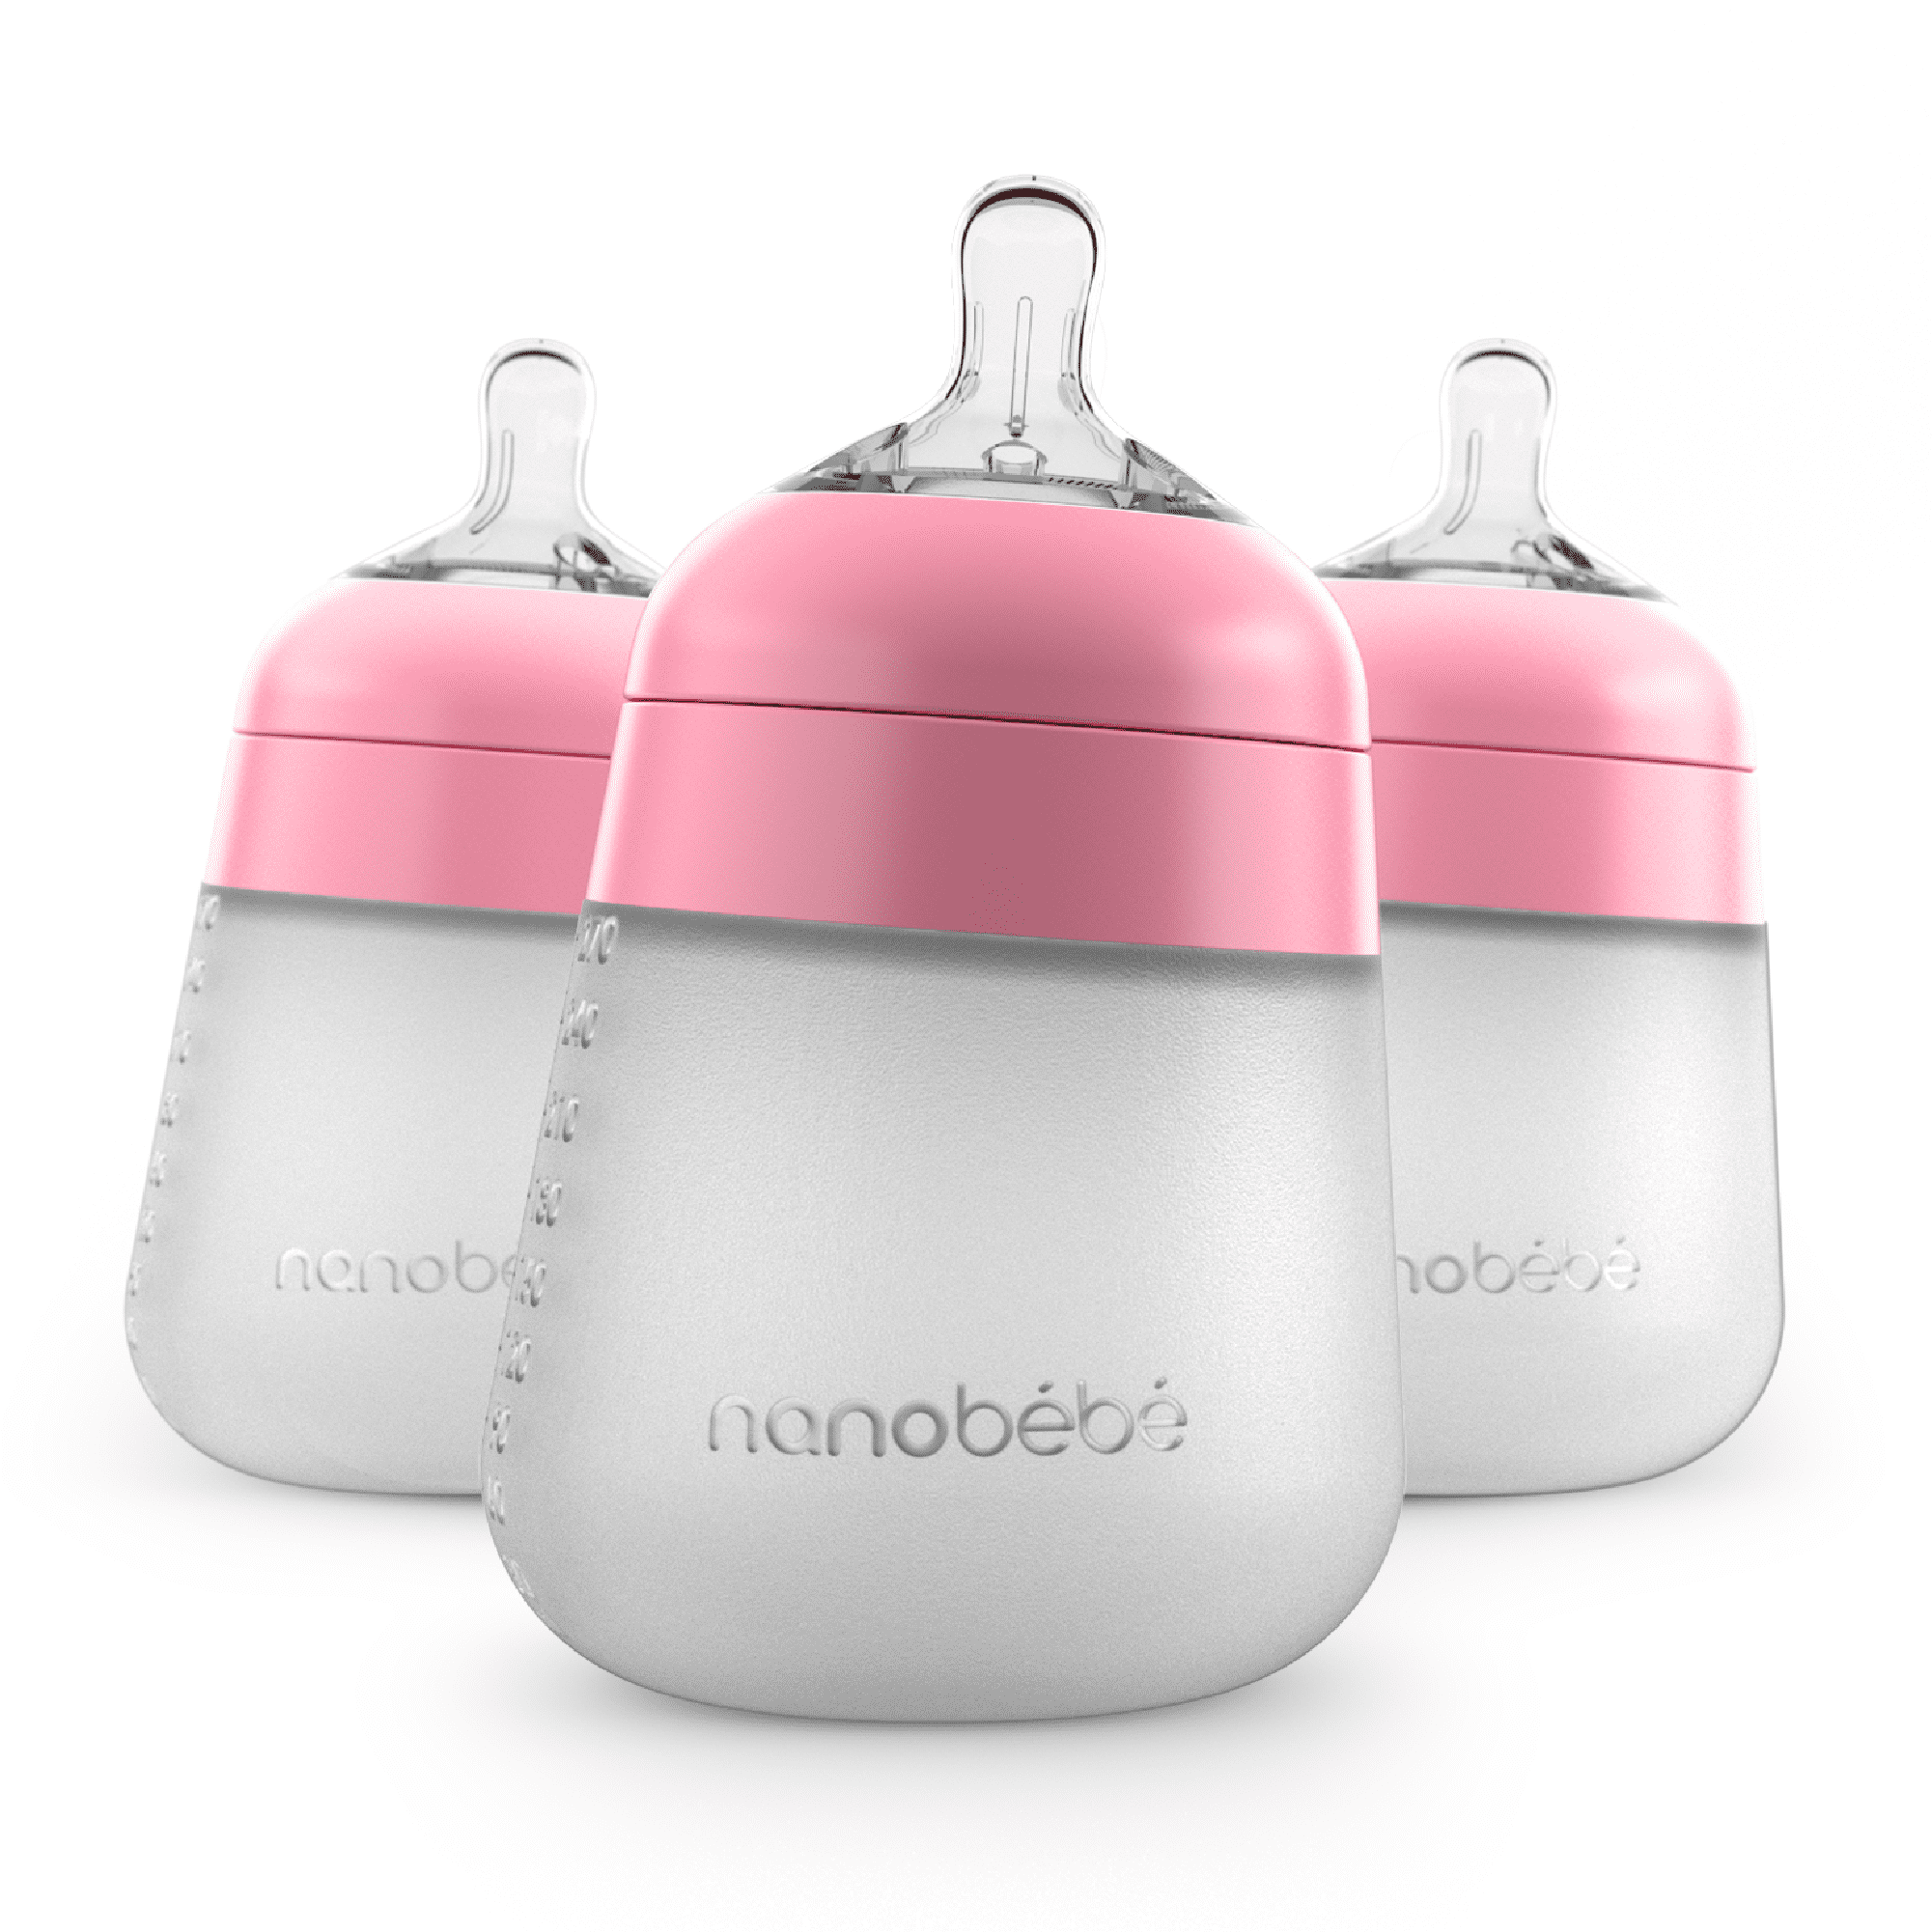 Teal nanobebe Feeding and Storing Set with 3pk Breastmilk Bottles and Baby Bottle Cooler Bag